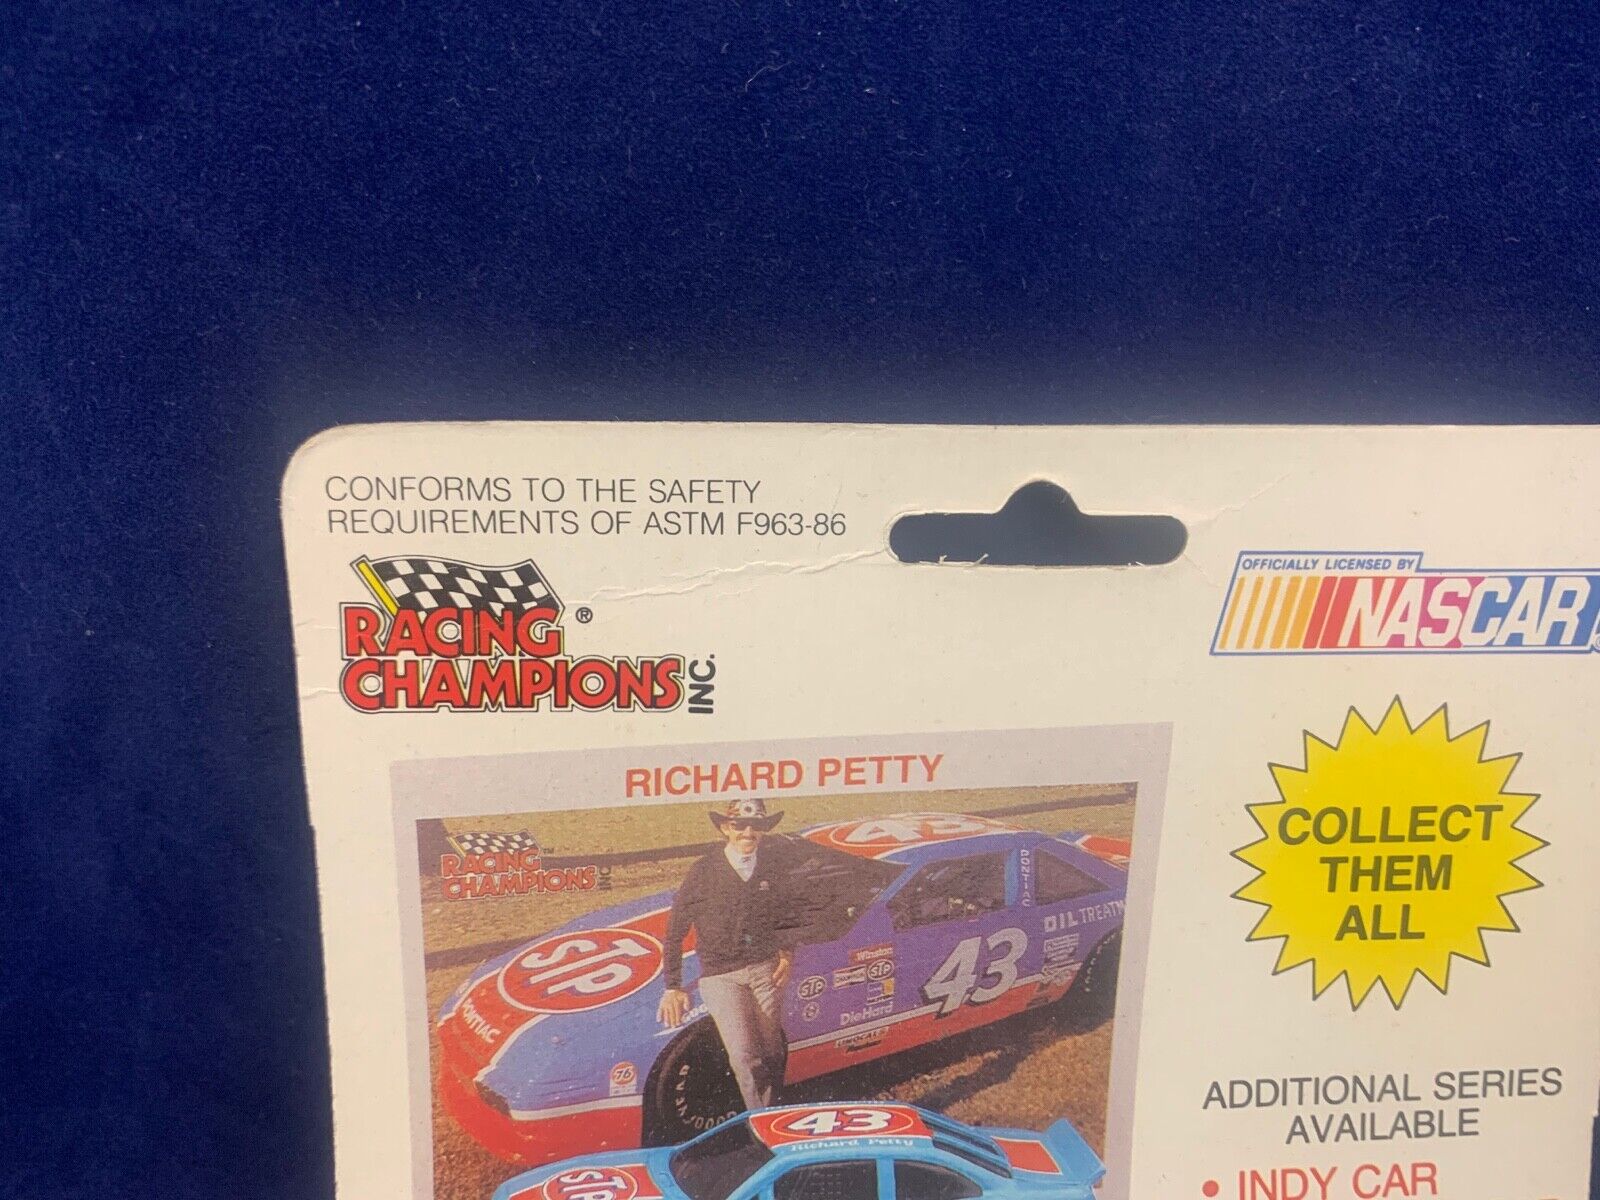 1992 Racing Champions  Daytona 500 Stock car 1992 Daytona Card and Display